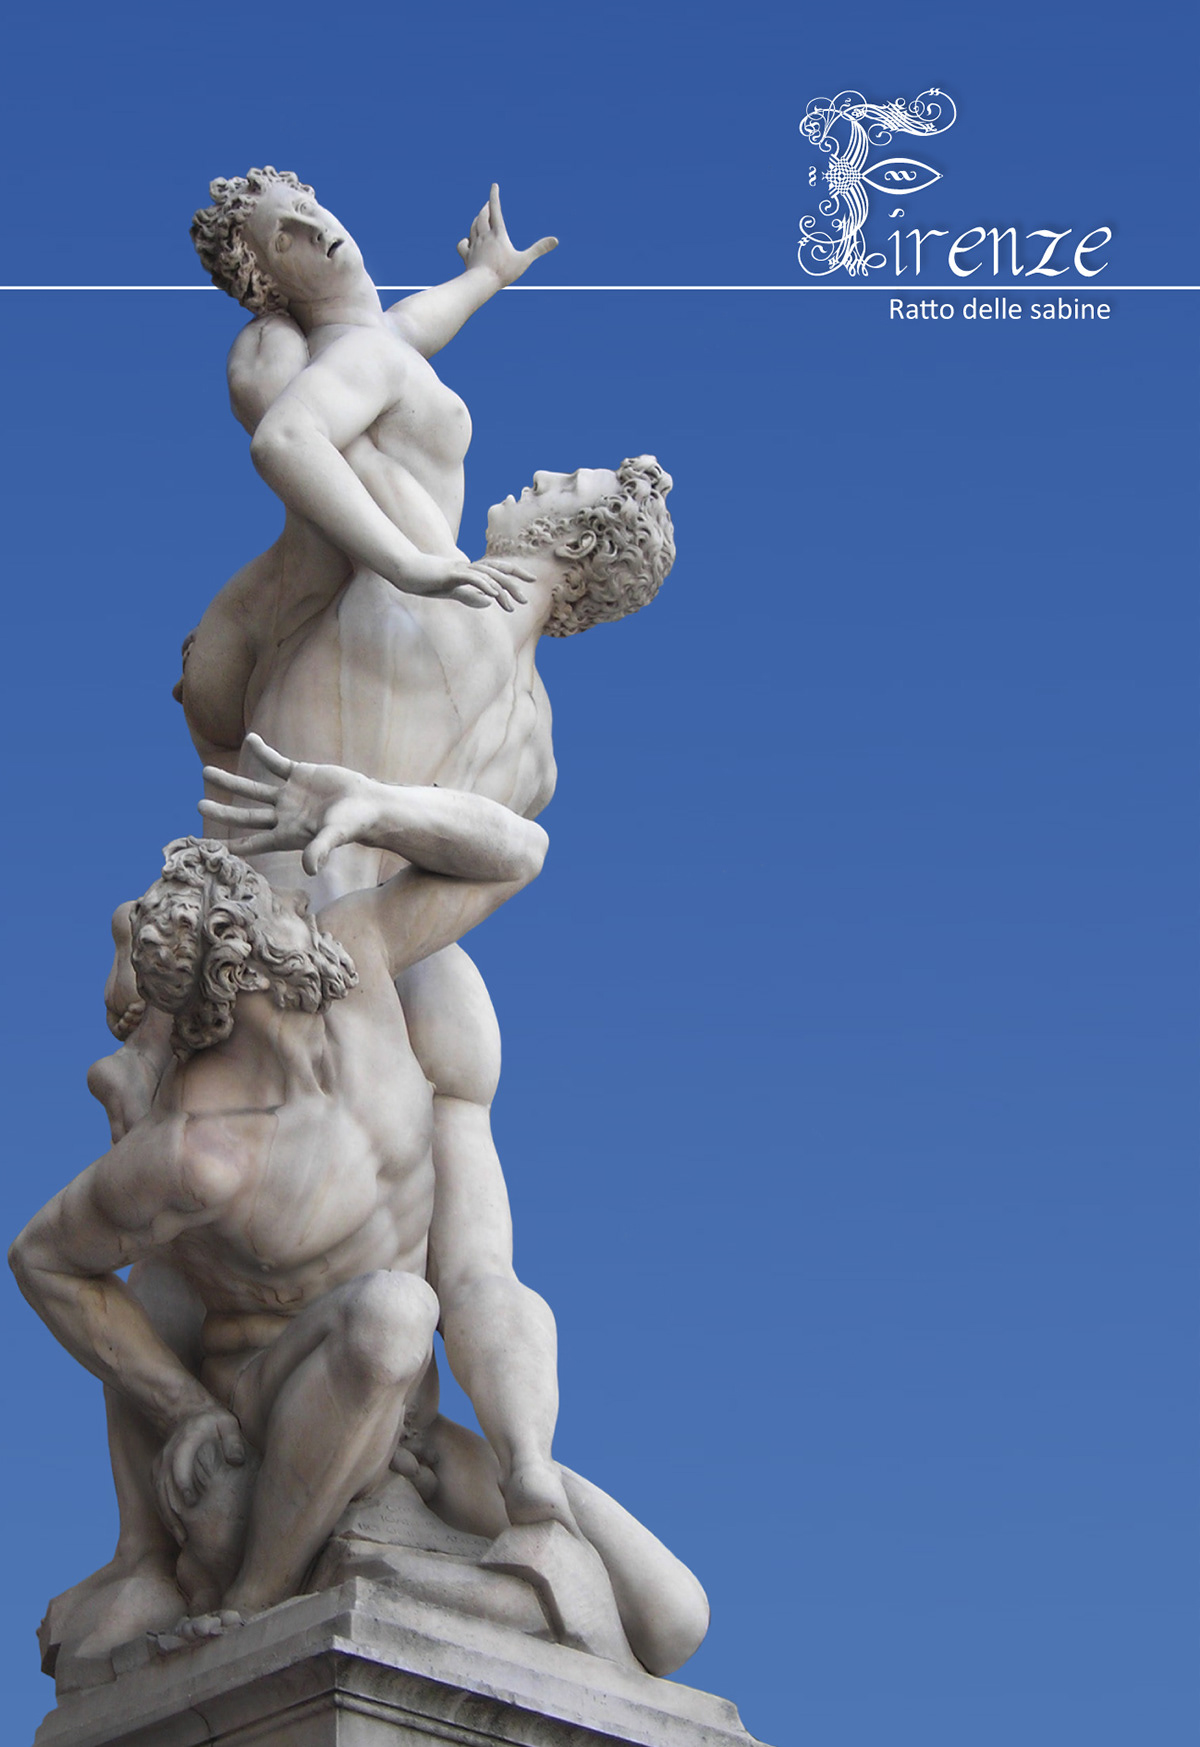 postcard Florence Italy Alessandro occhipinti photo statues david Michelangelo ercole pirro polissena ratto sabine